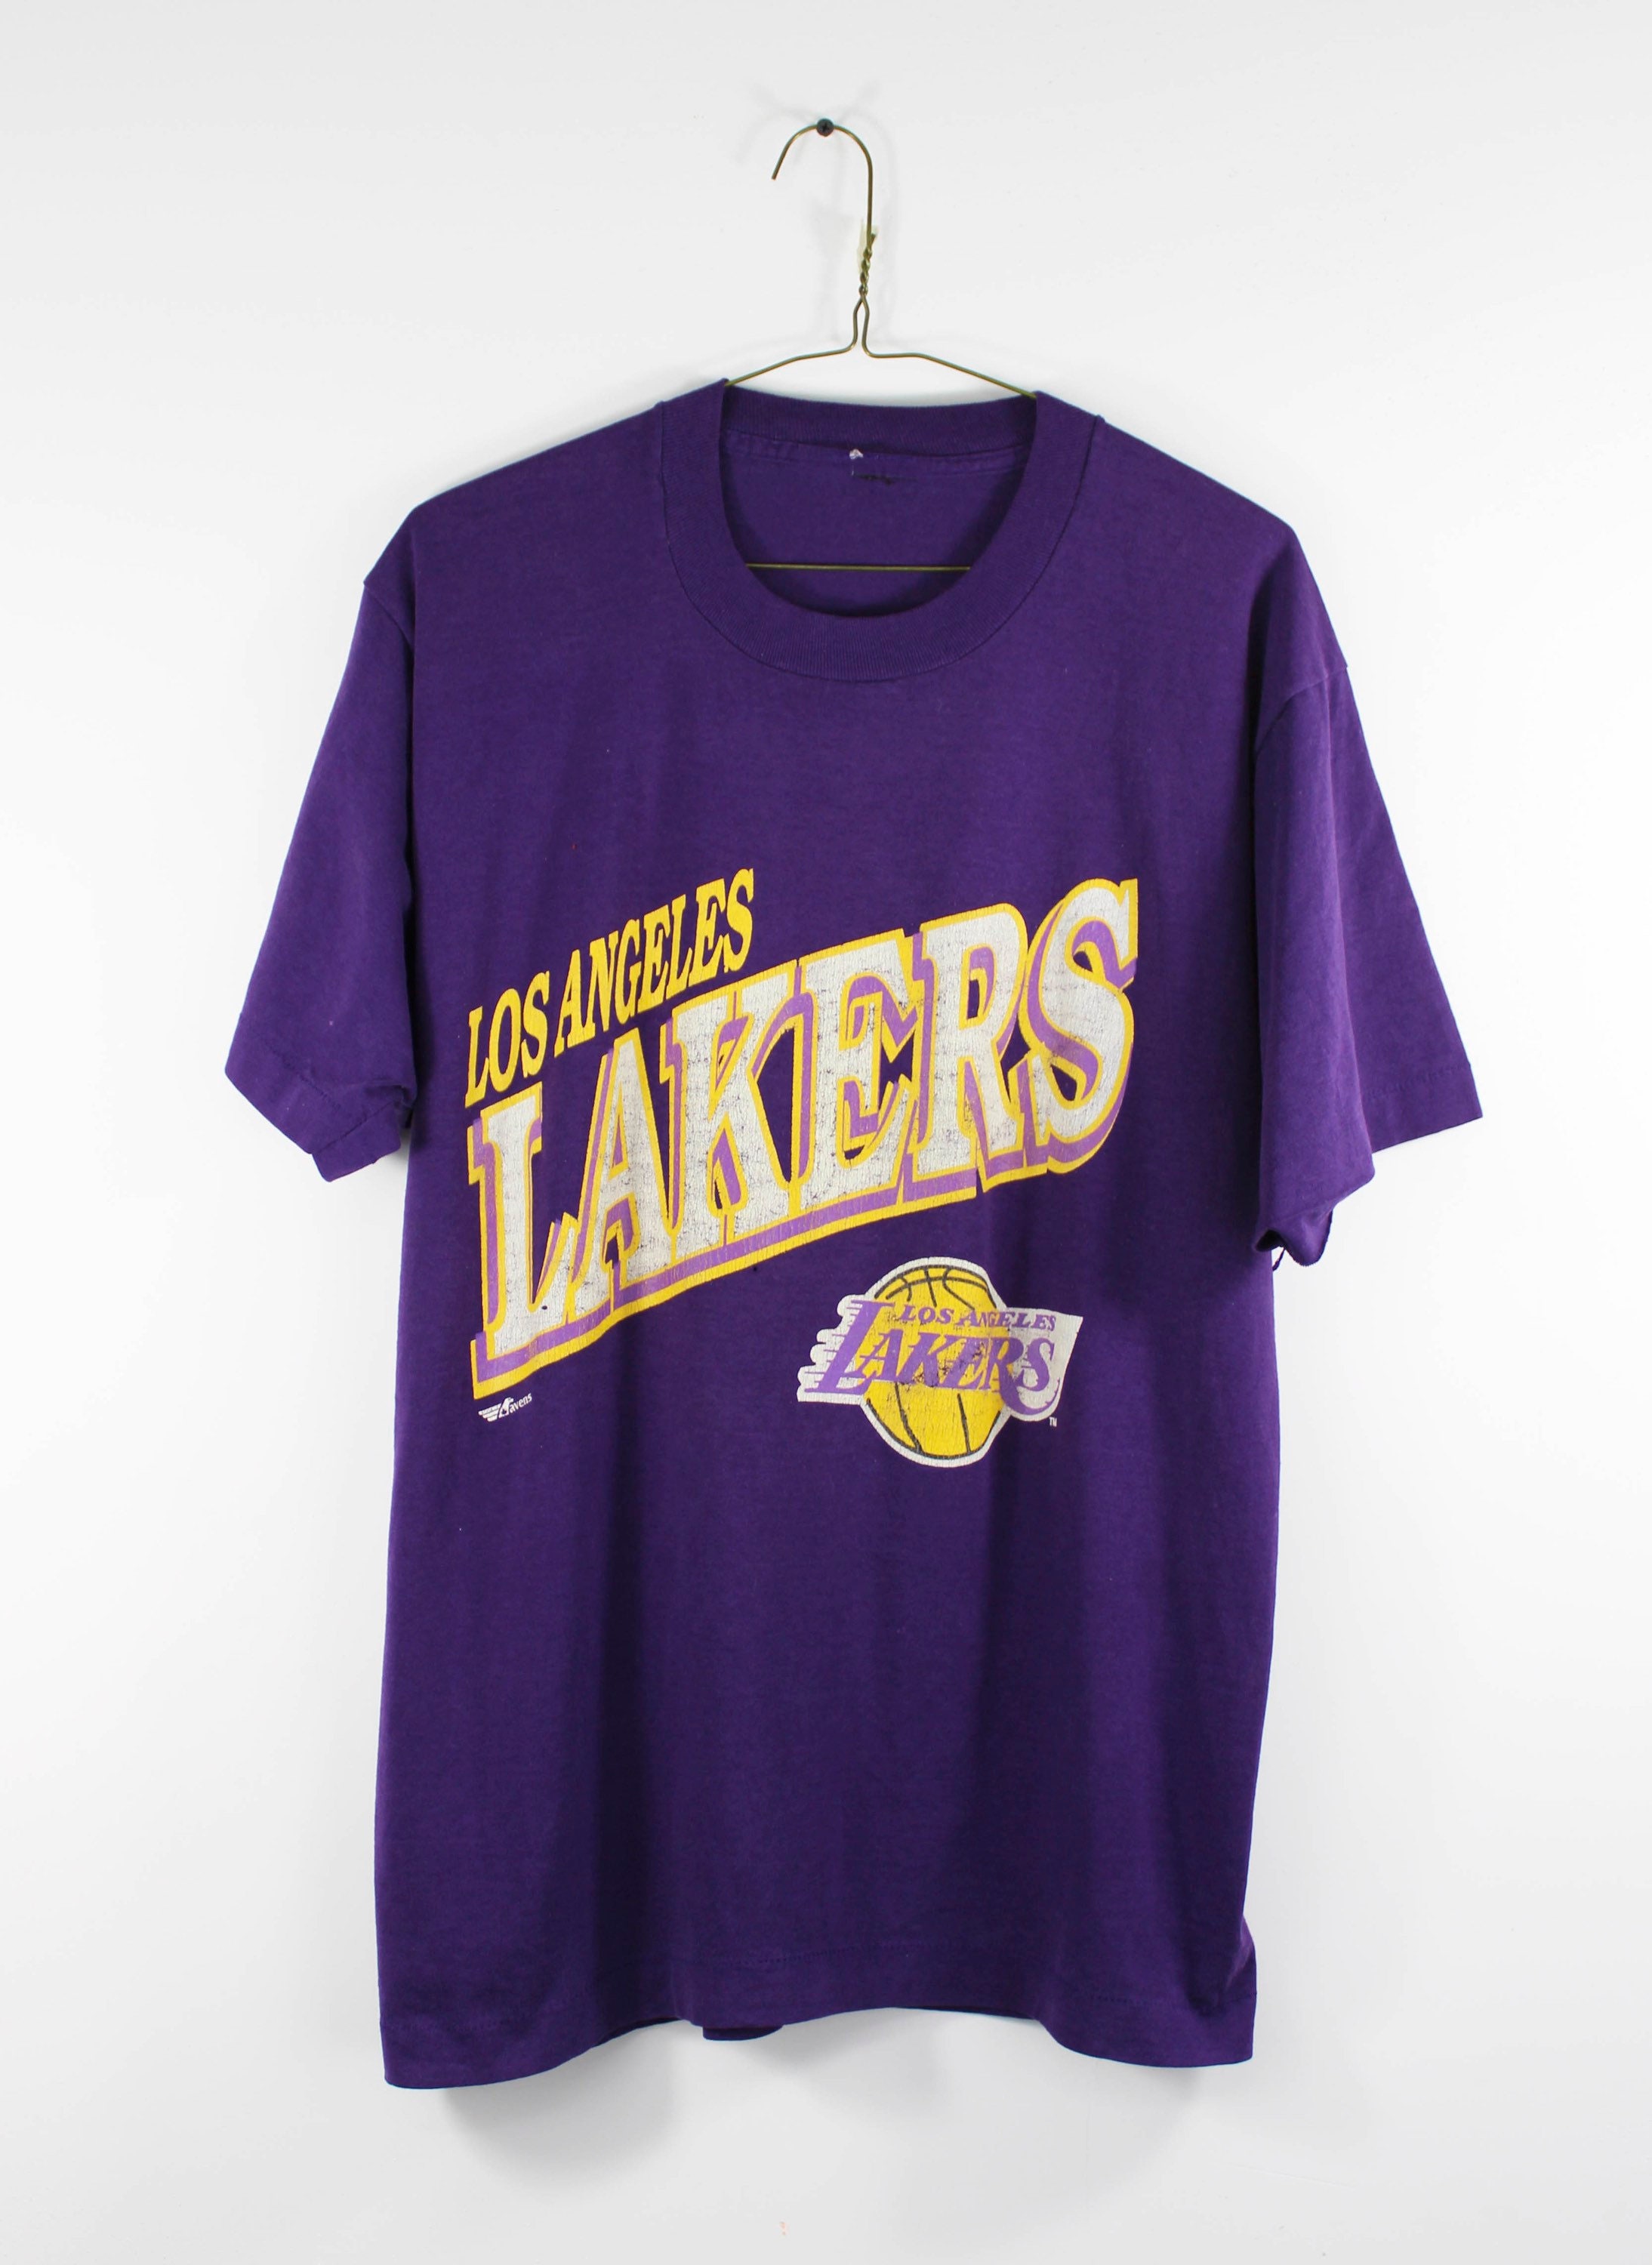 Los Angeles Lakers #8 Kobe Bryant Crenshaw Jersey Nipsey Hussle